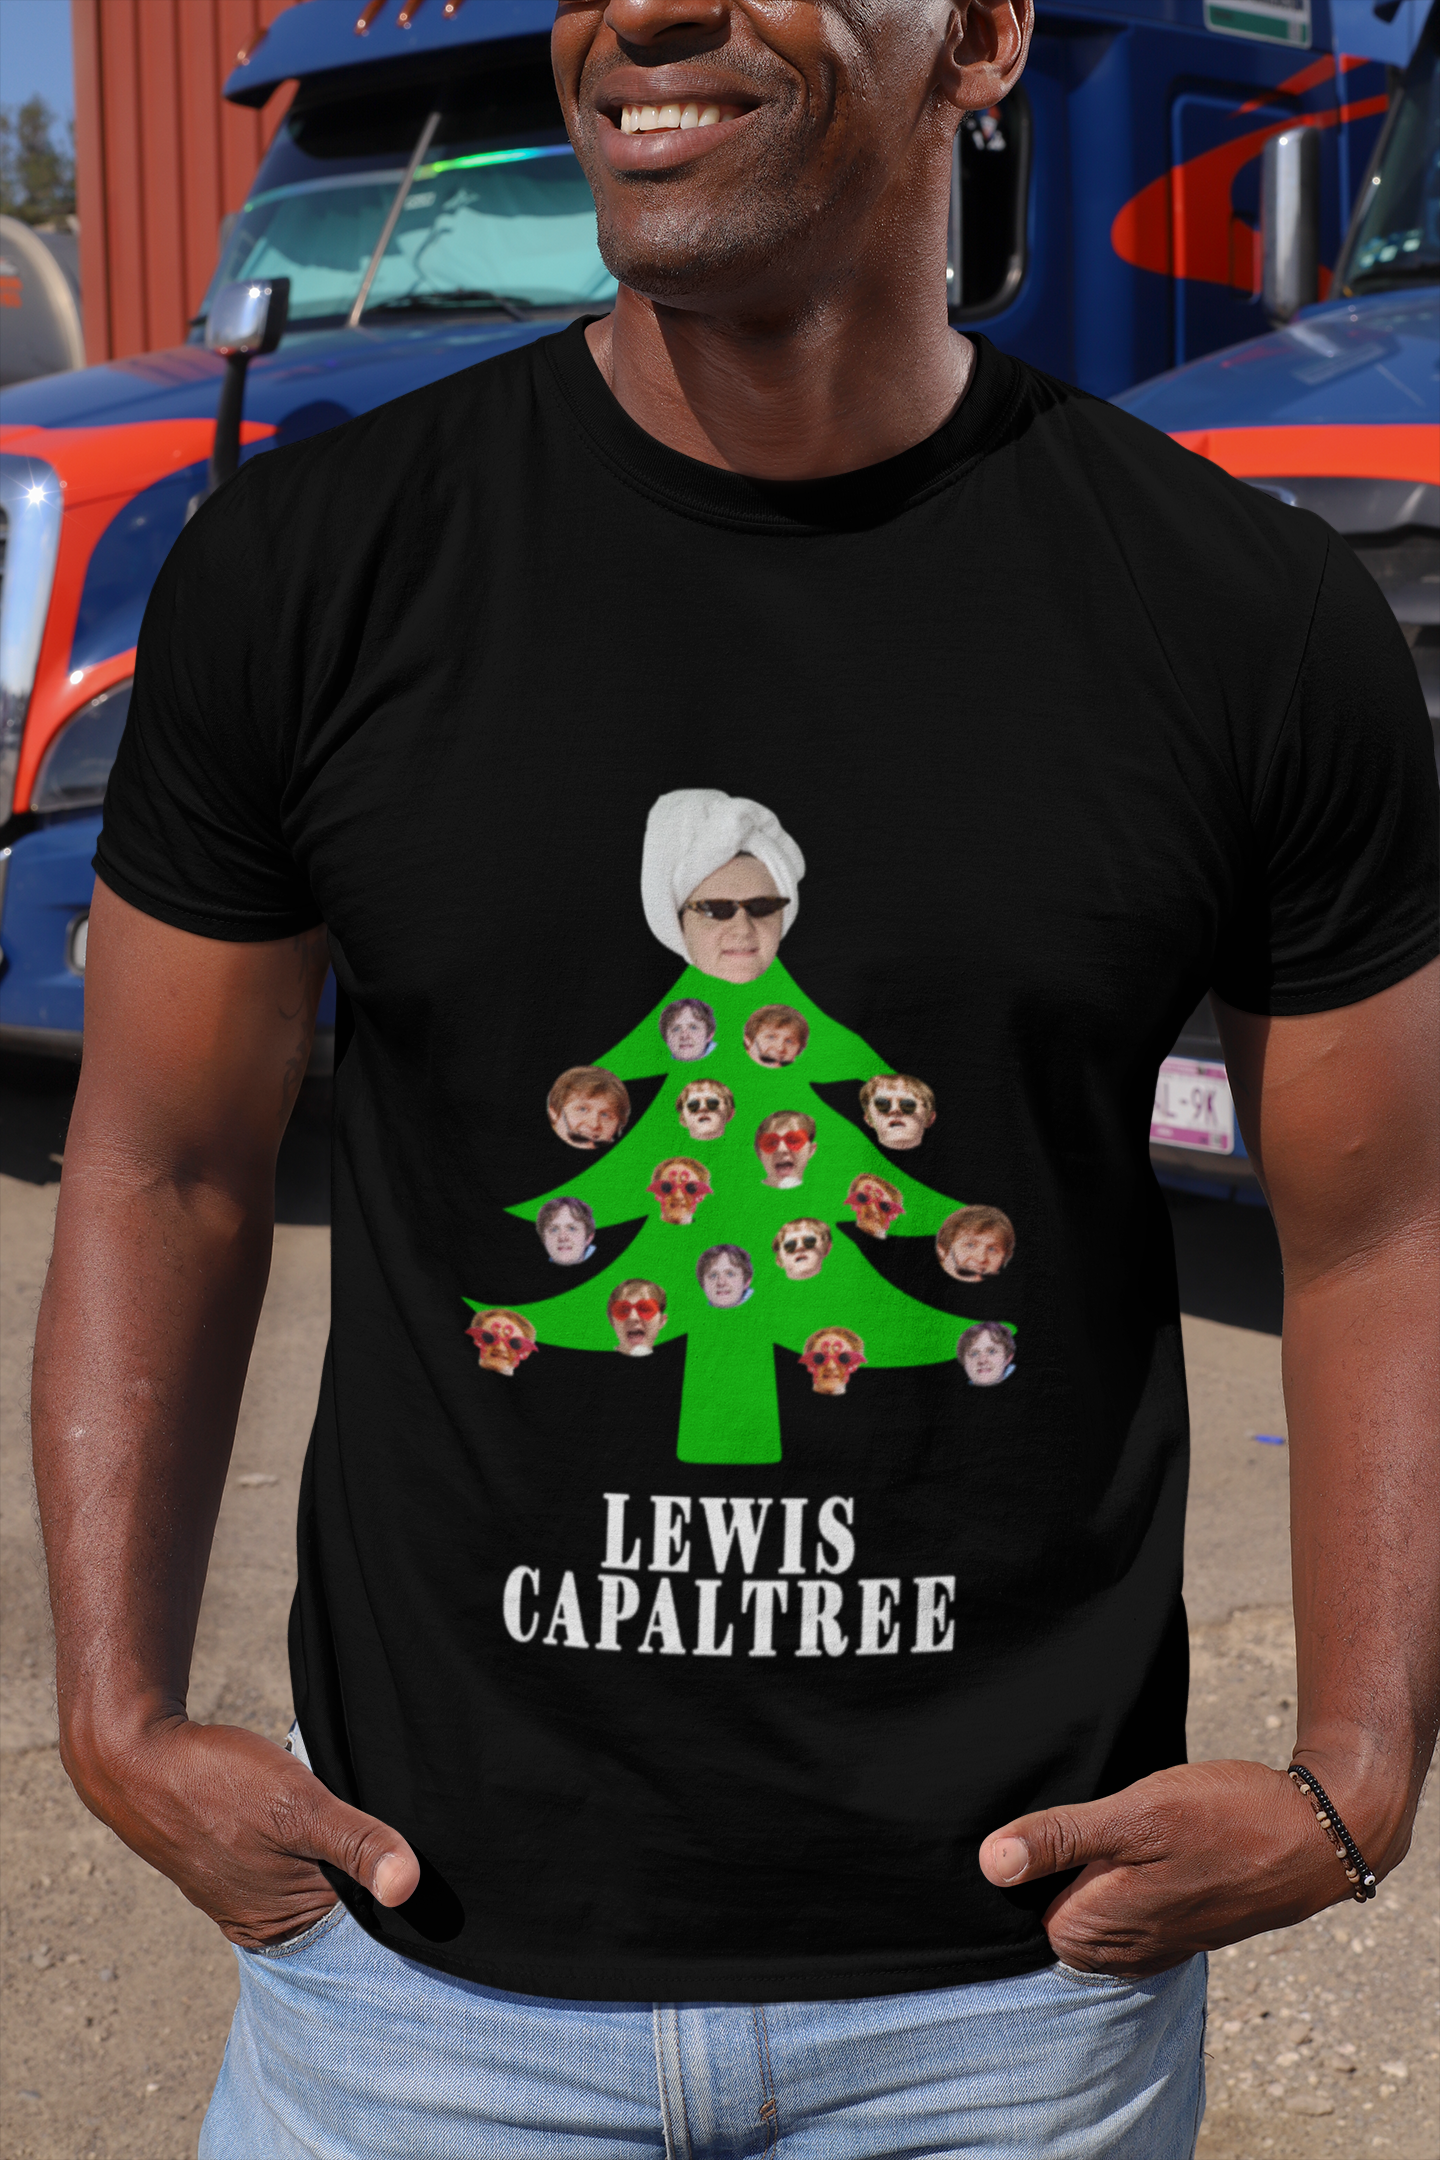 Lewis capaltree christmas tree shirt